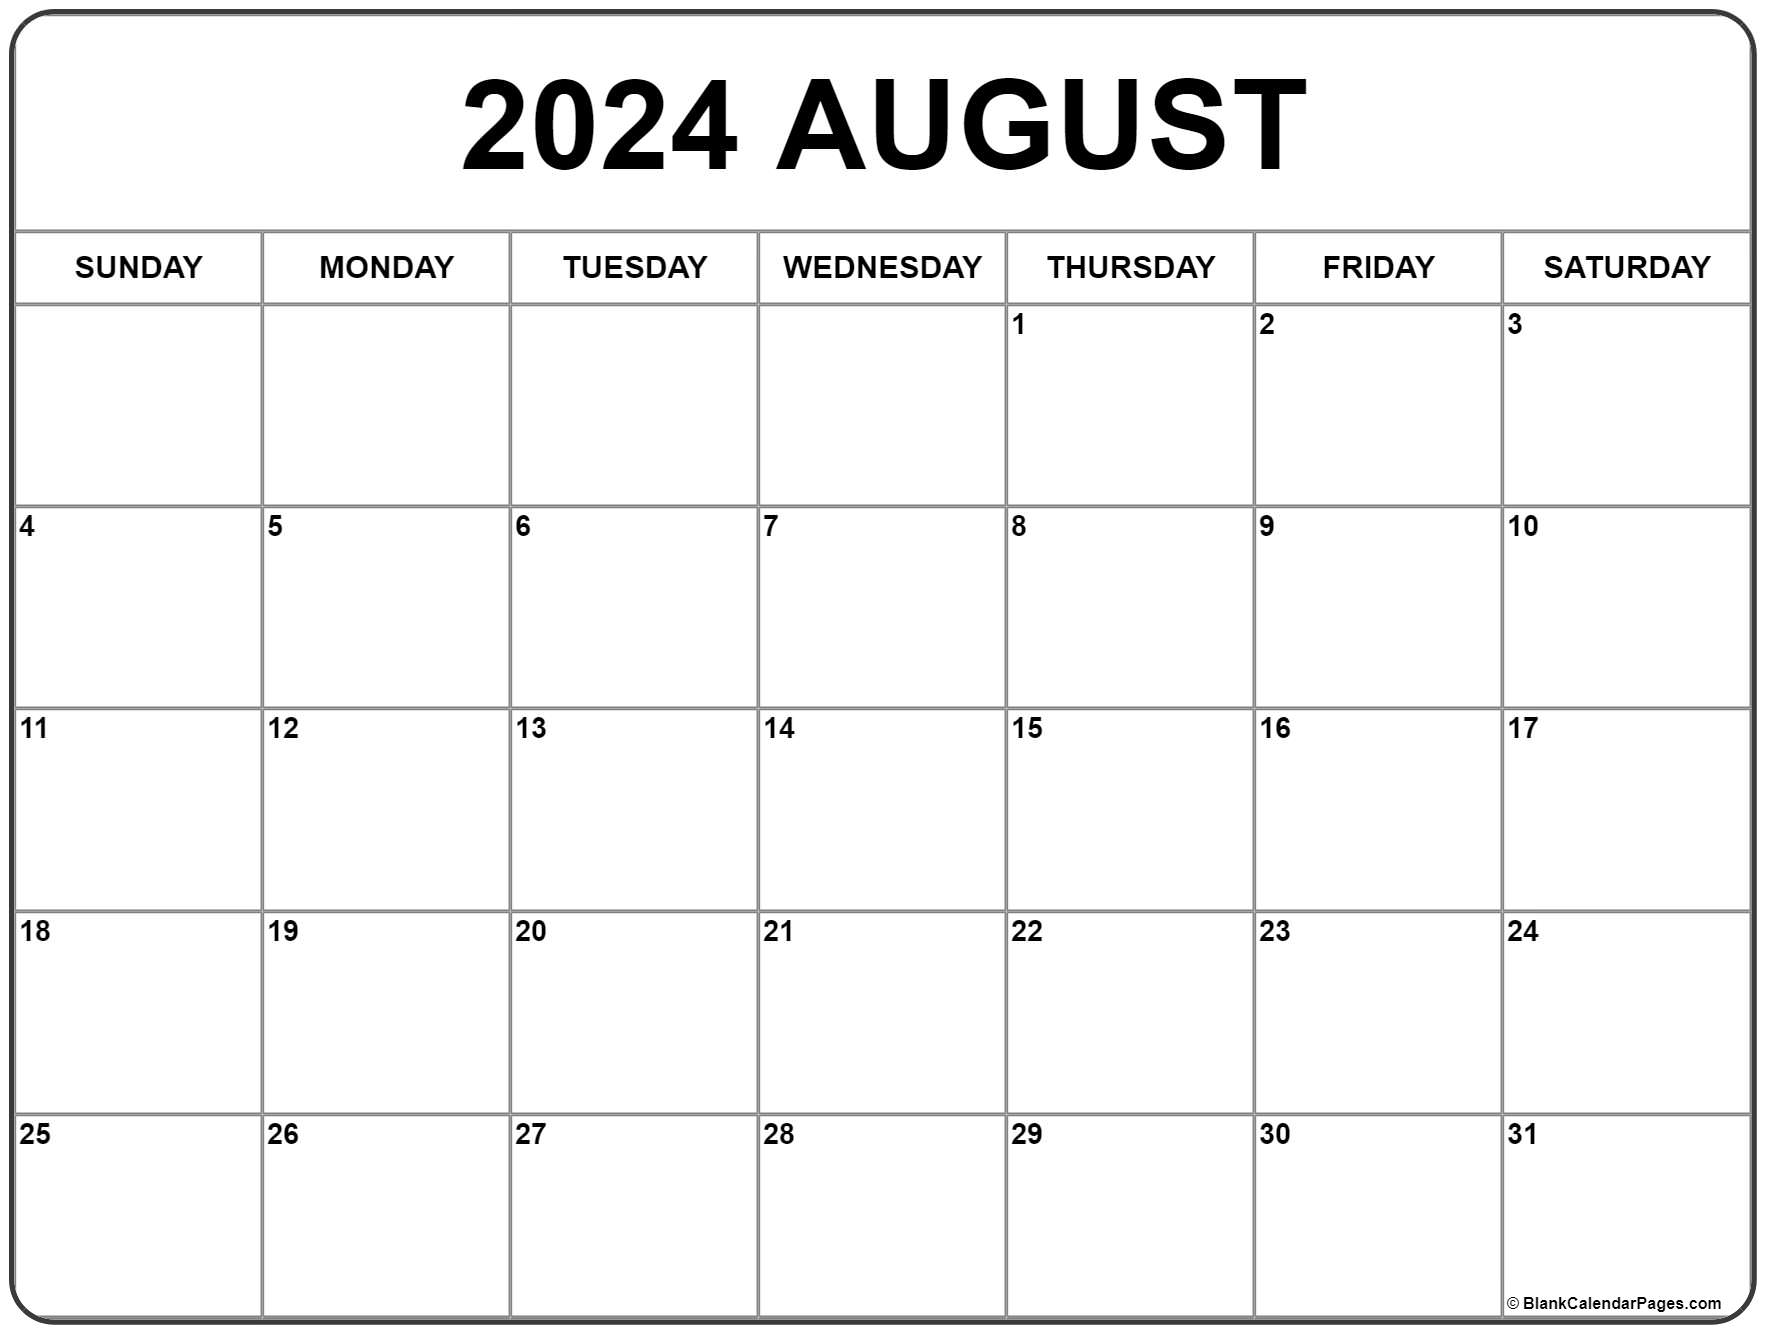 Printable Calendar 2021 August August 2021 calendar | free printable monthly calendars